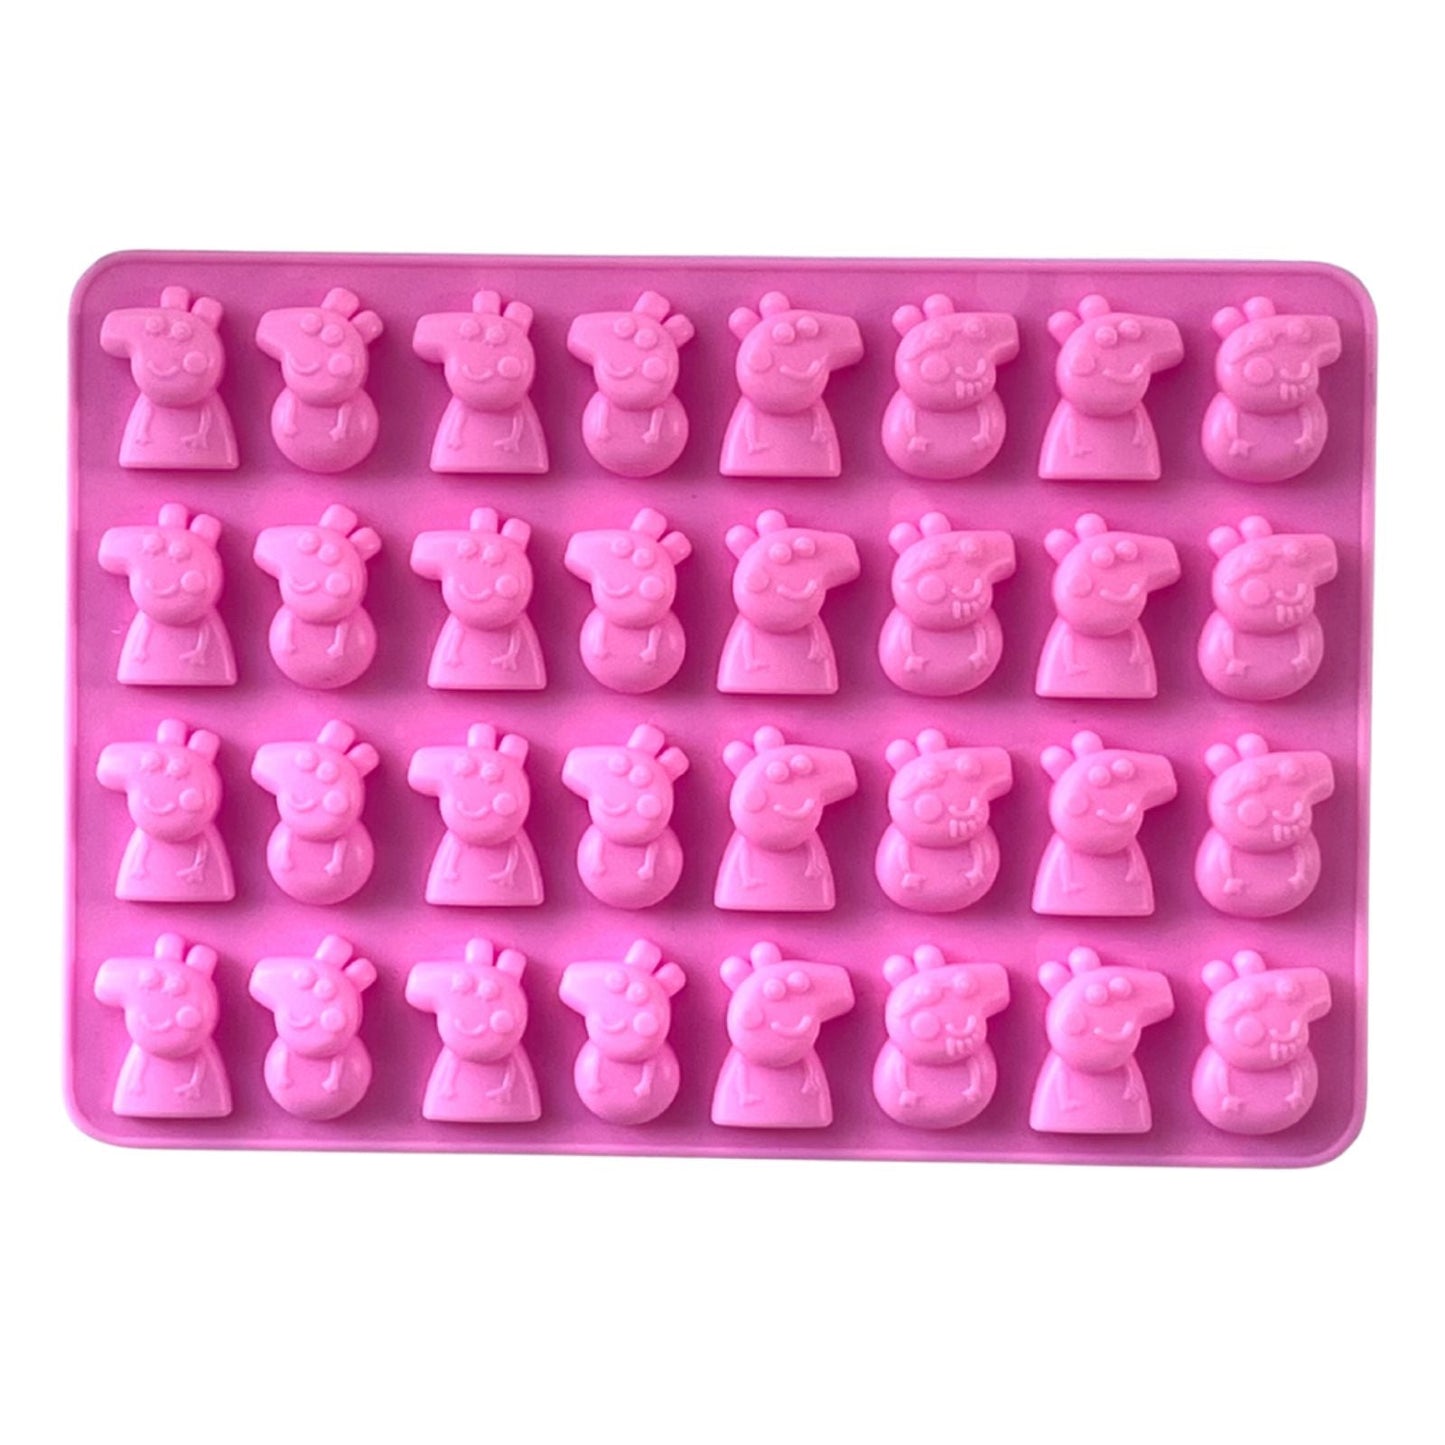 Piglets Jelly Combo WhipUpMagic